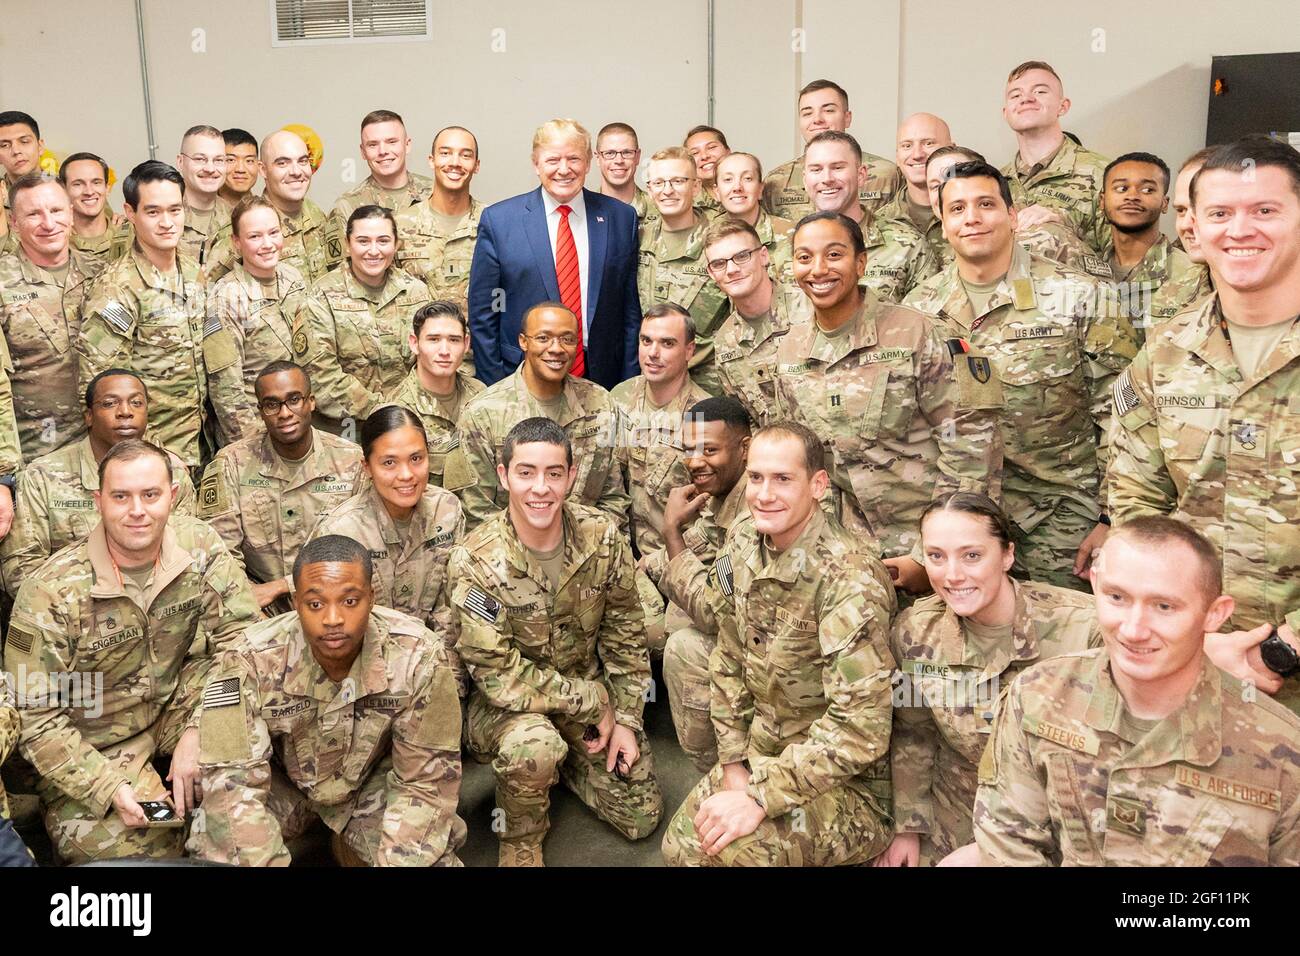 president-donald-j-trump-visits-troops-a